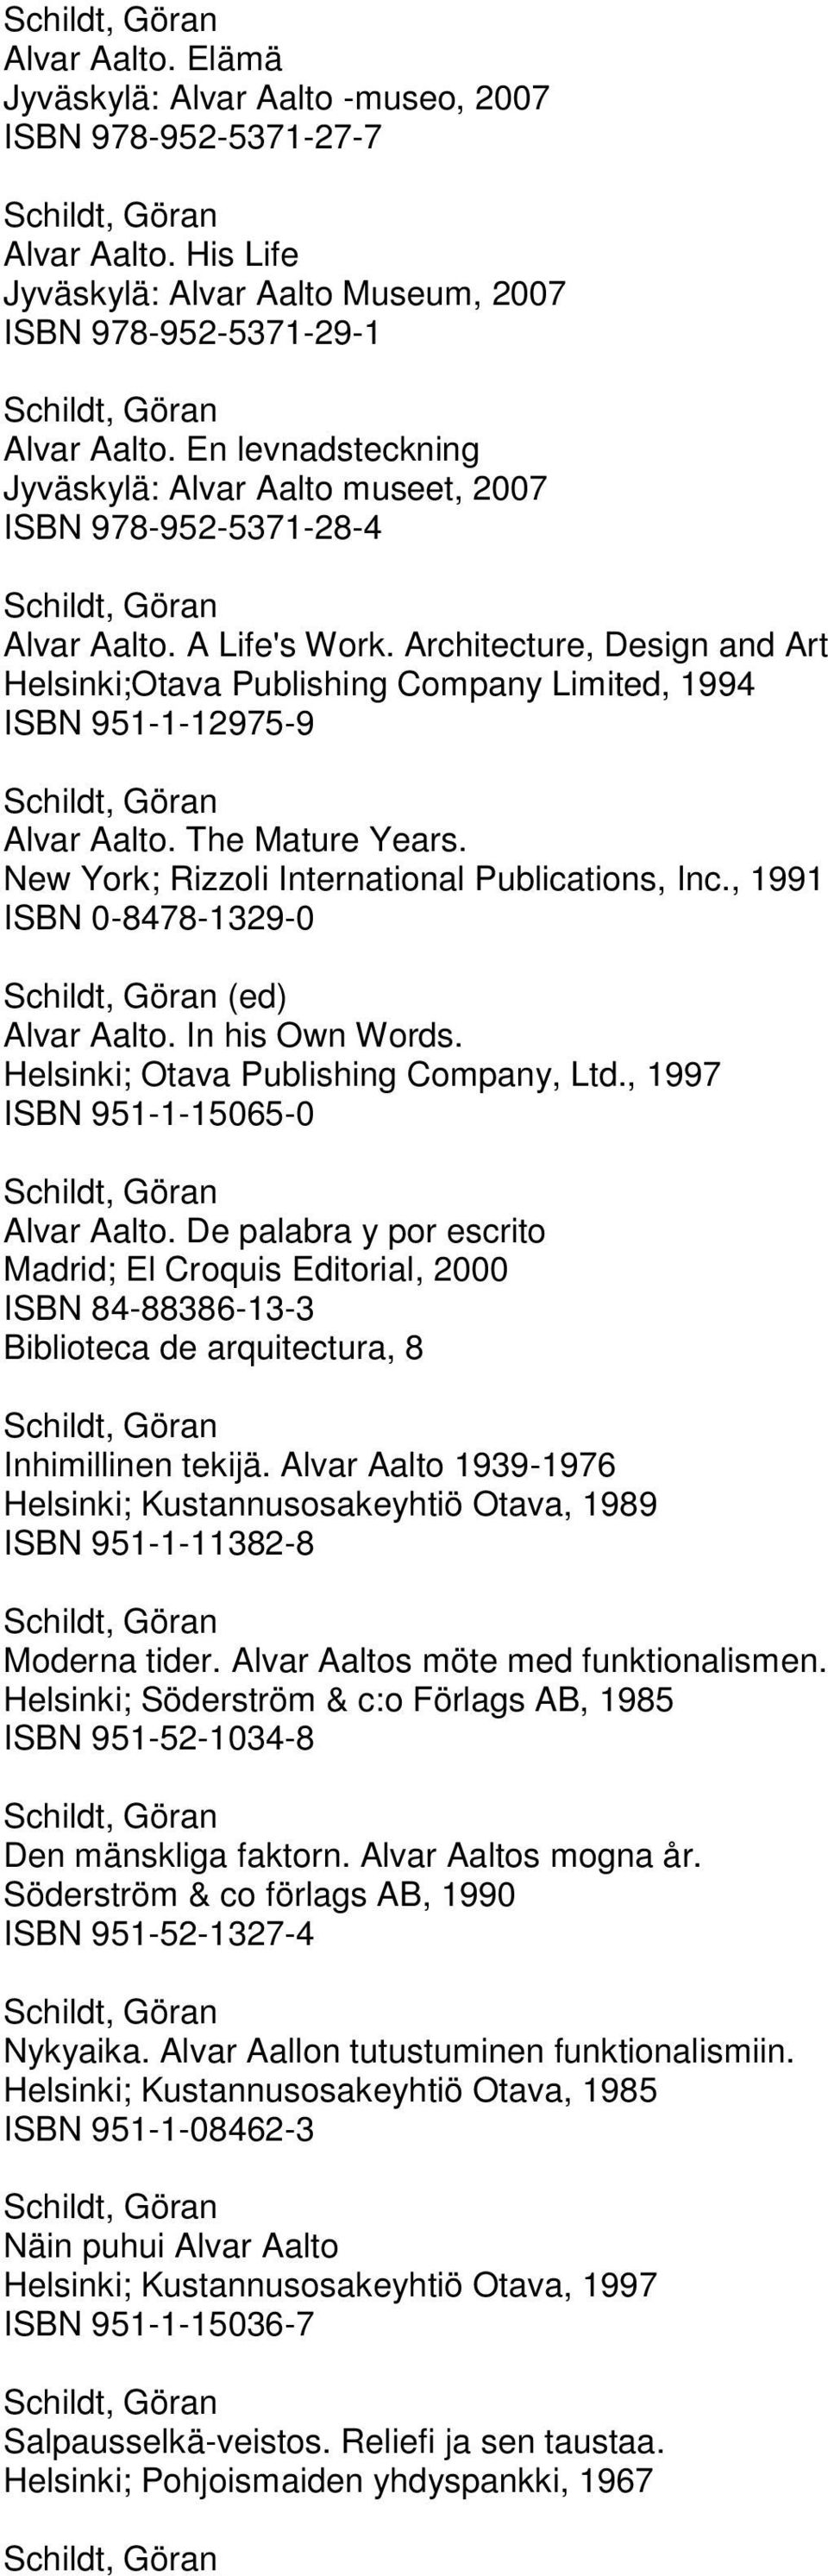 In his Own Words. Helsinki; Otava Publishing Company, Ltd., 1997 ISBN 951-1-15065-0.